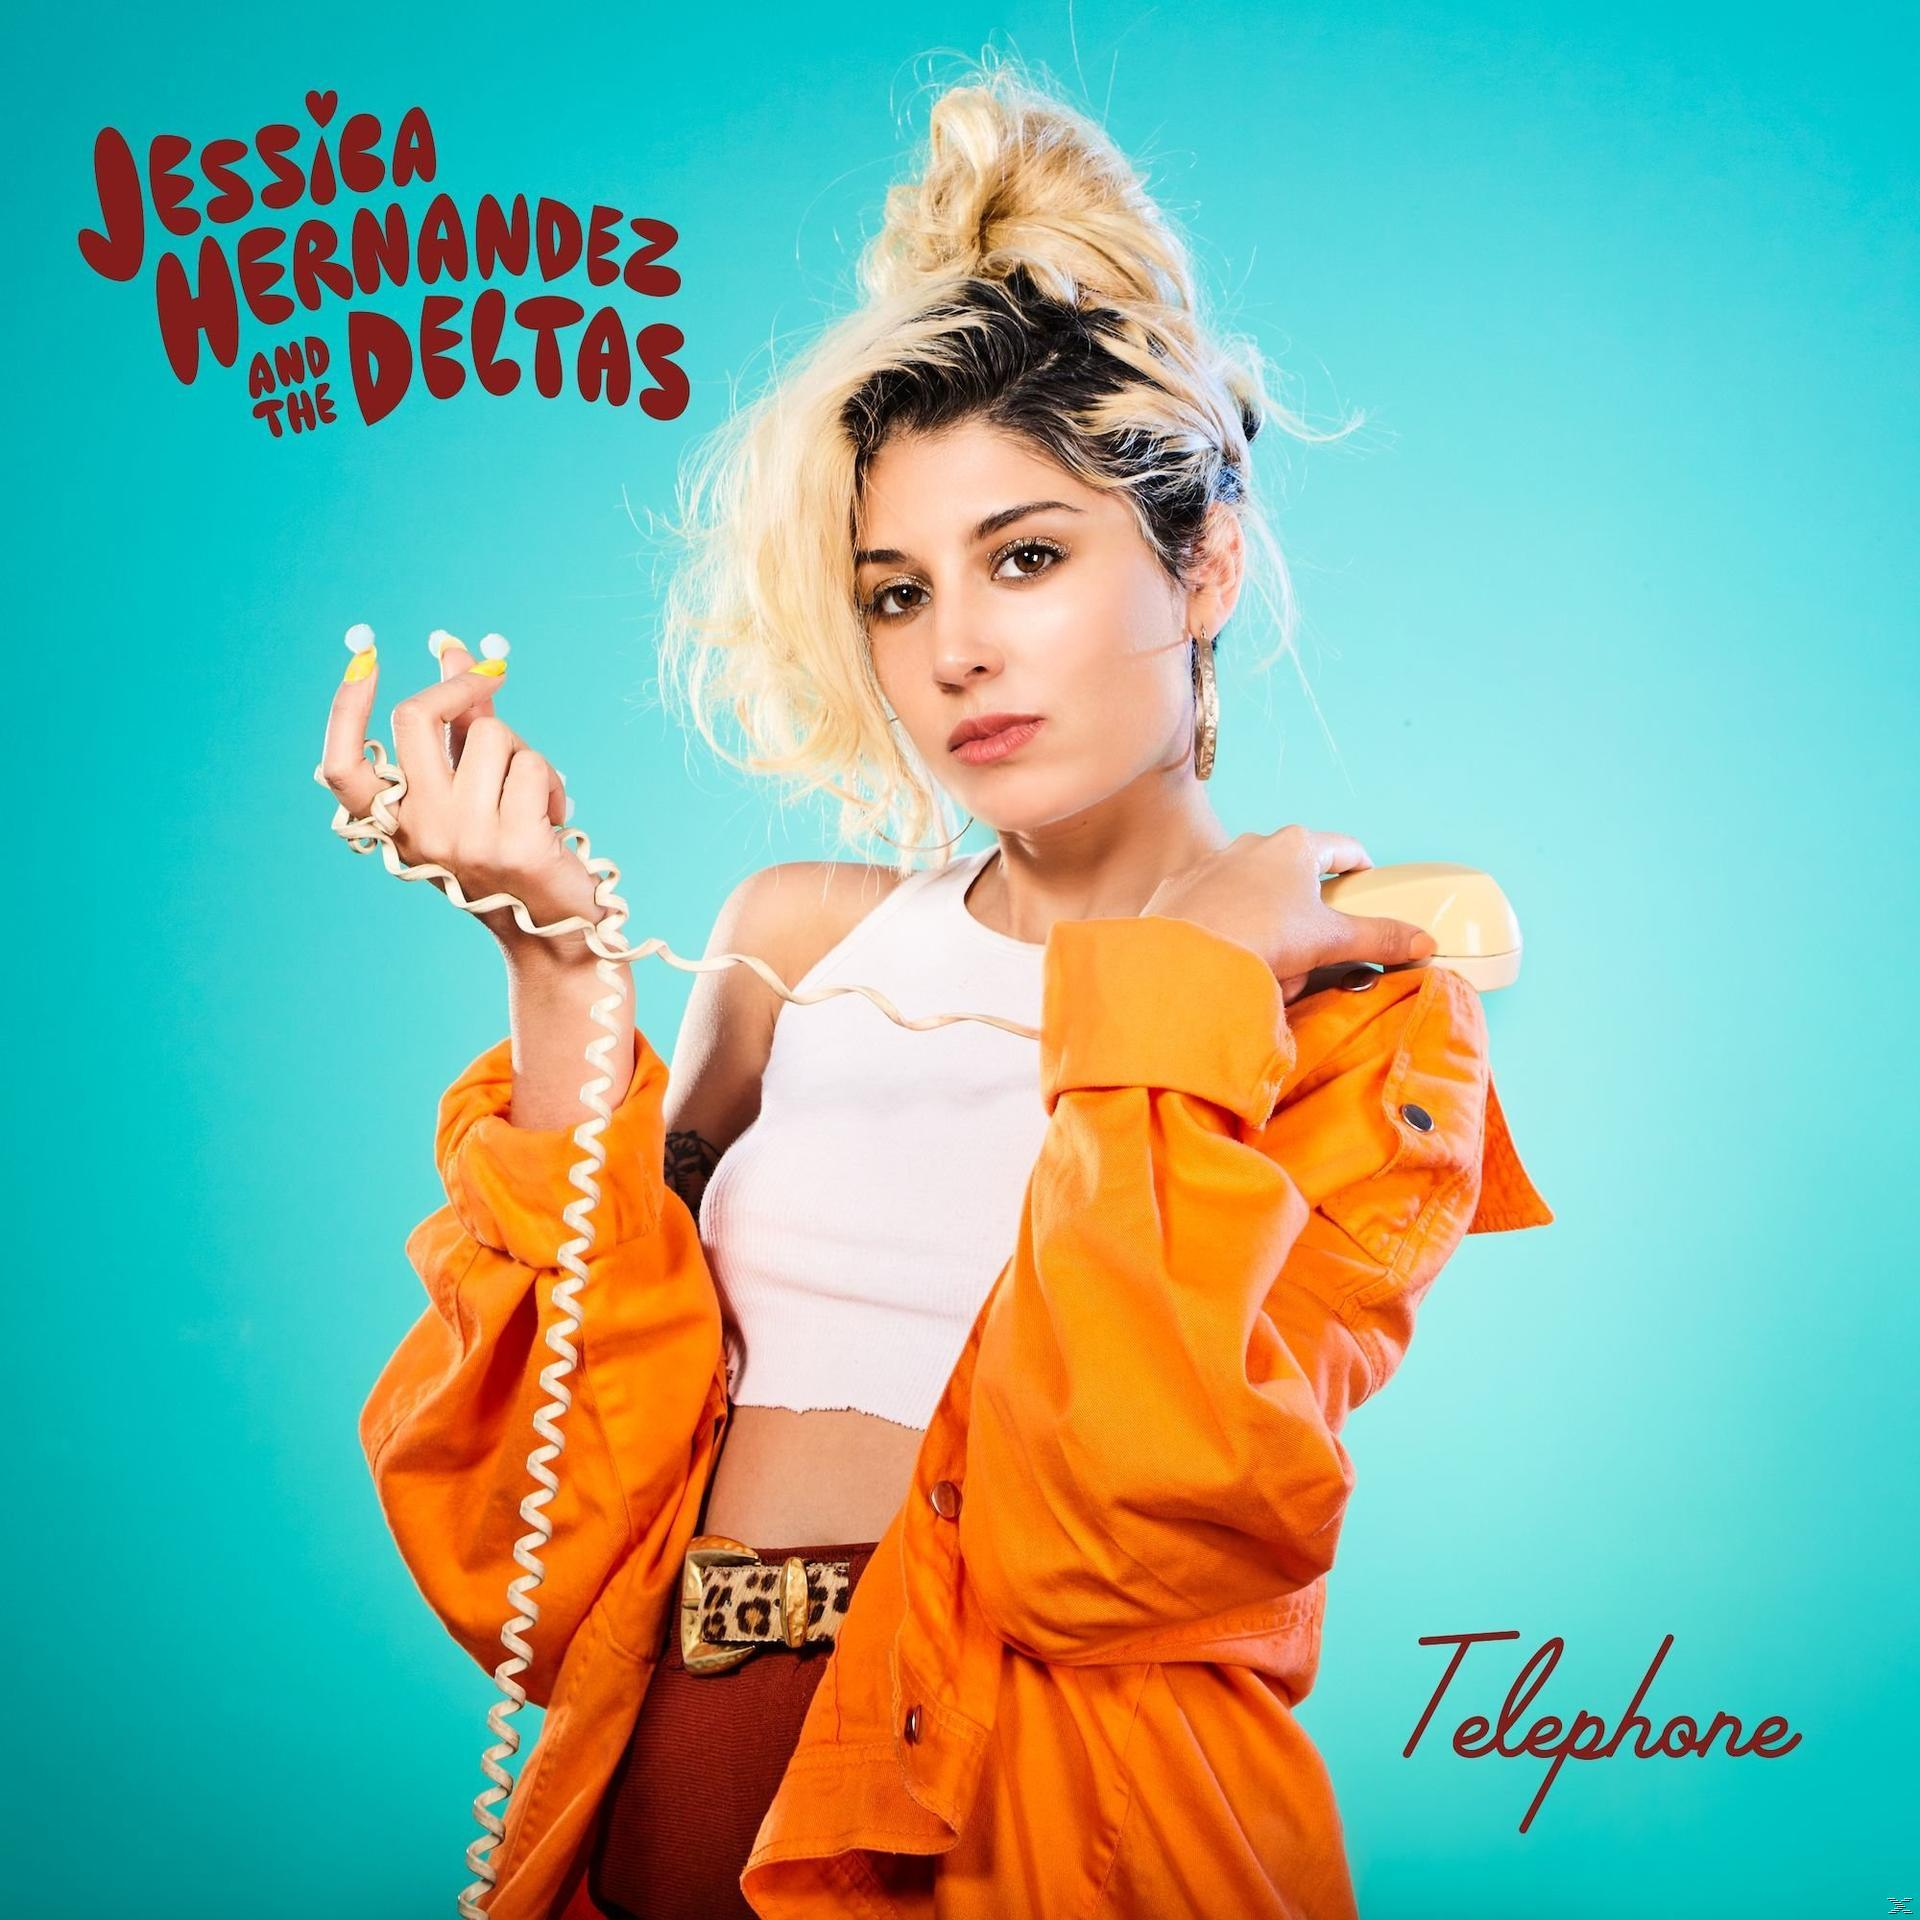 The Jessica - Telephone (Vinyl) Hernandez Deltas - &